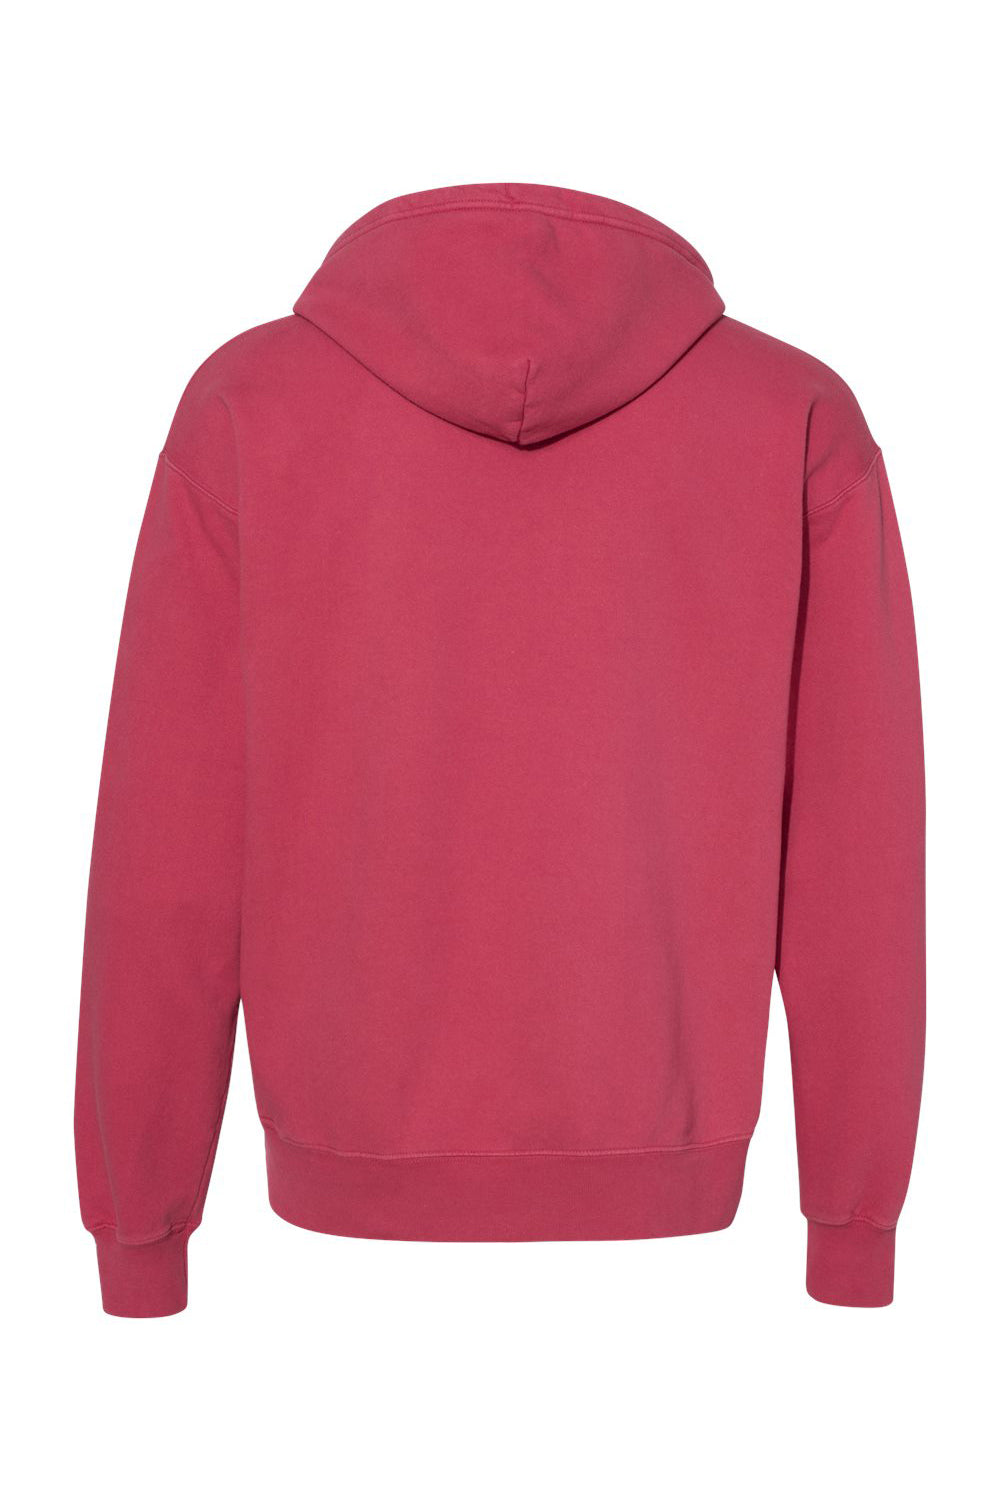 Champion CD450 Mens Garment Dyed Hooded Sweatshirt Hoodie Crimson Red Flat Back